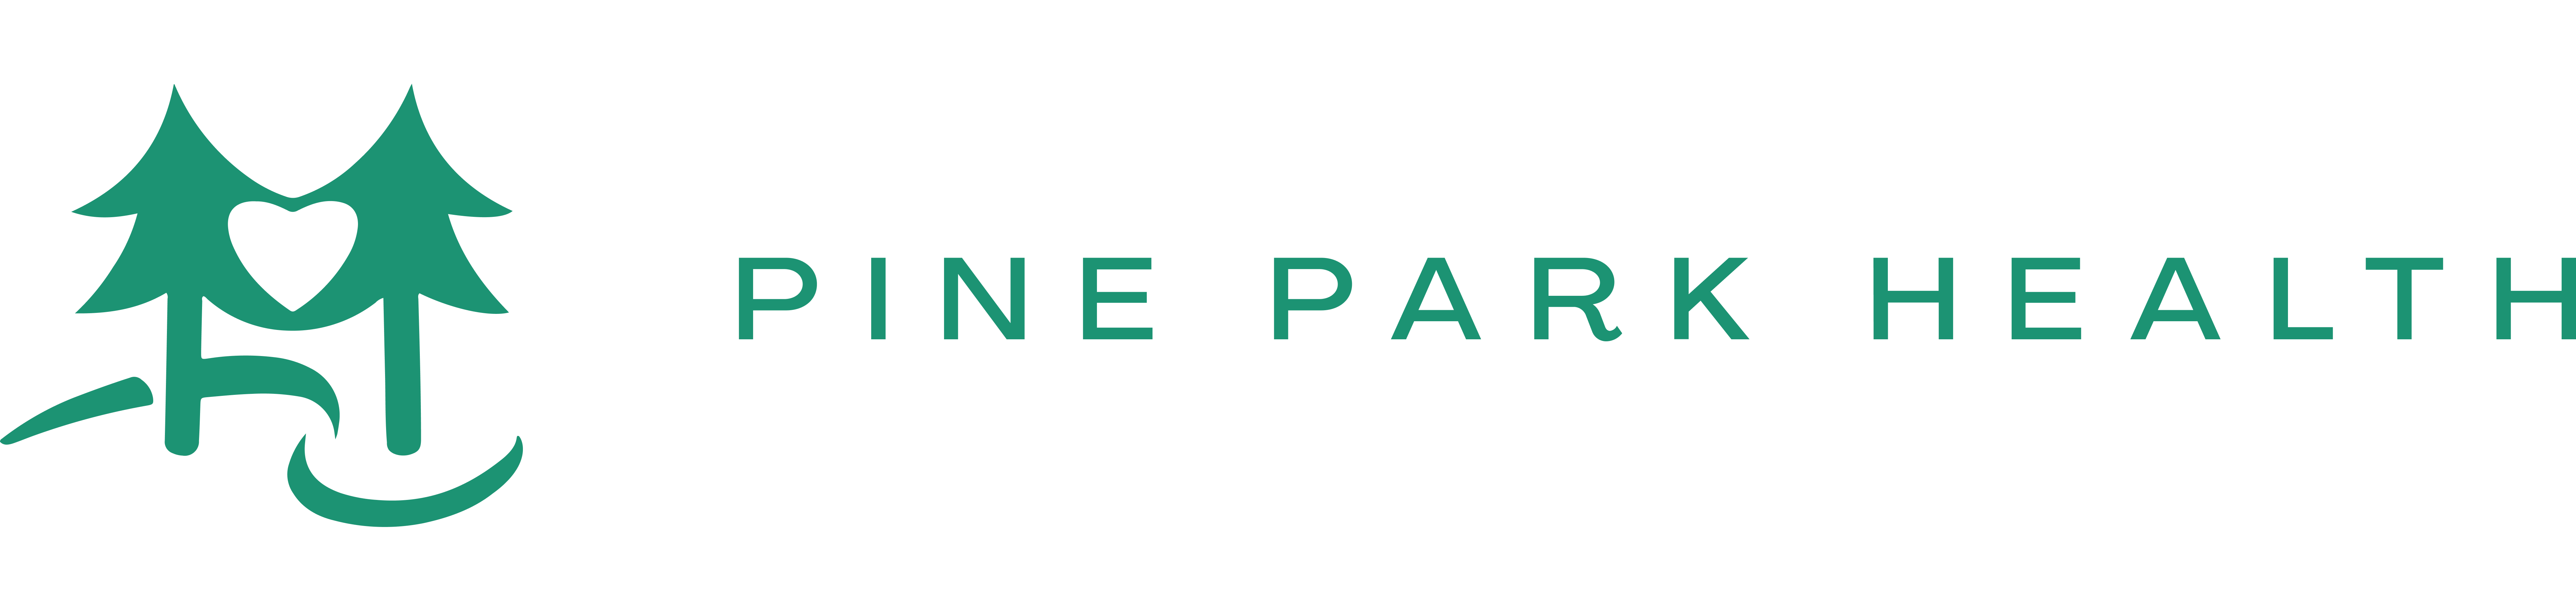 pine park health logo